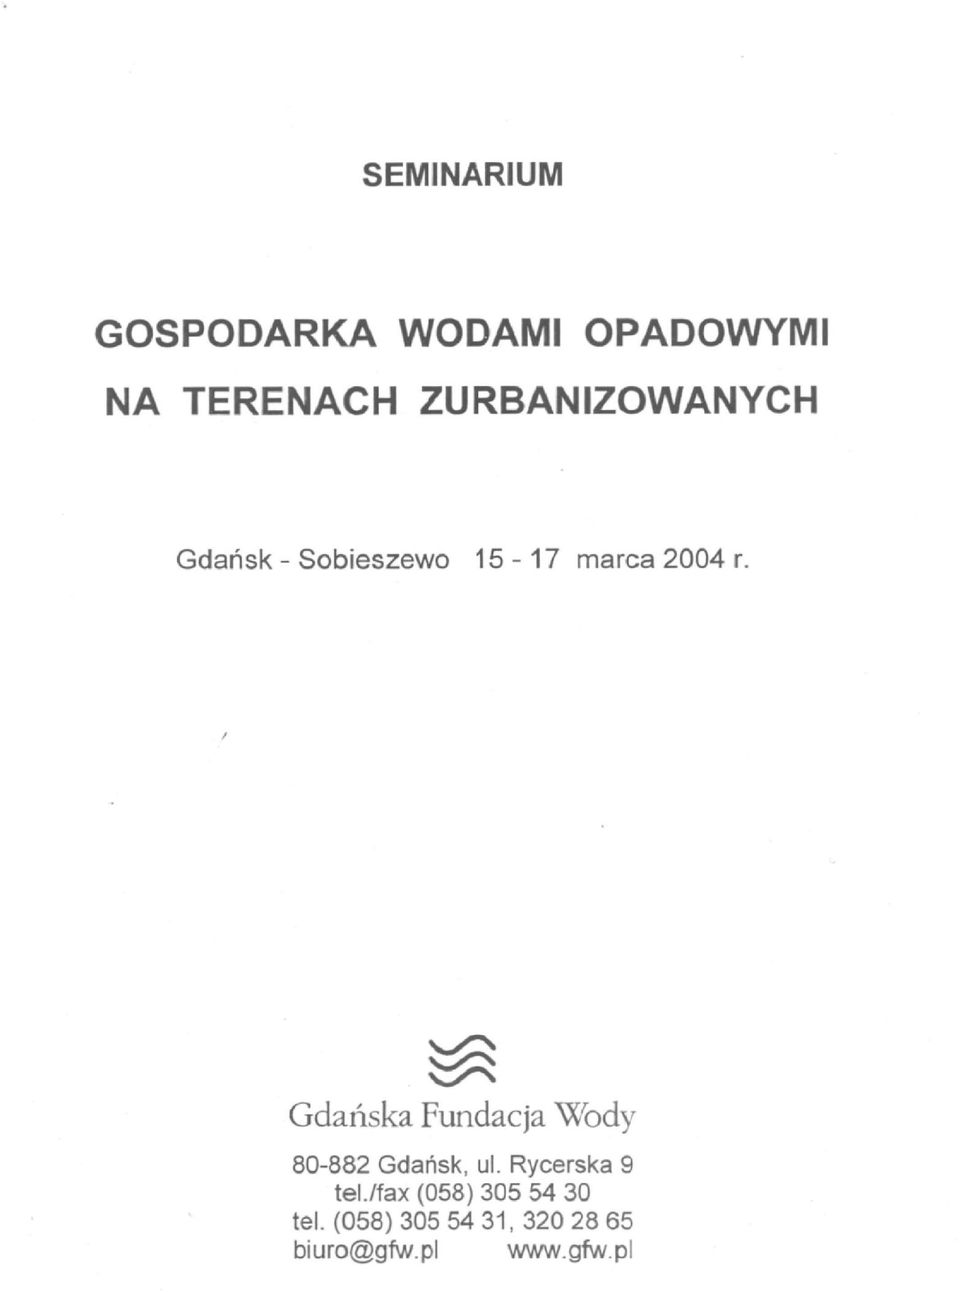 Gdańska Fundacja Wody 80-882 Gdańsk, ul. Rycerska 9 tel.